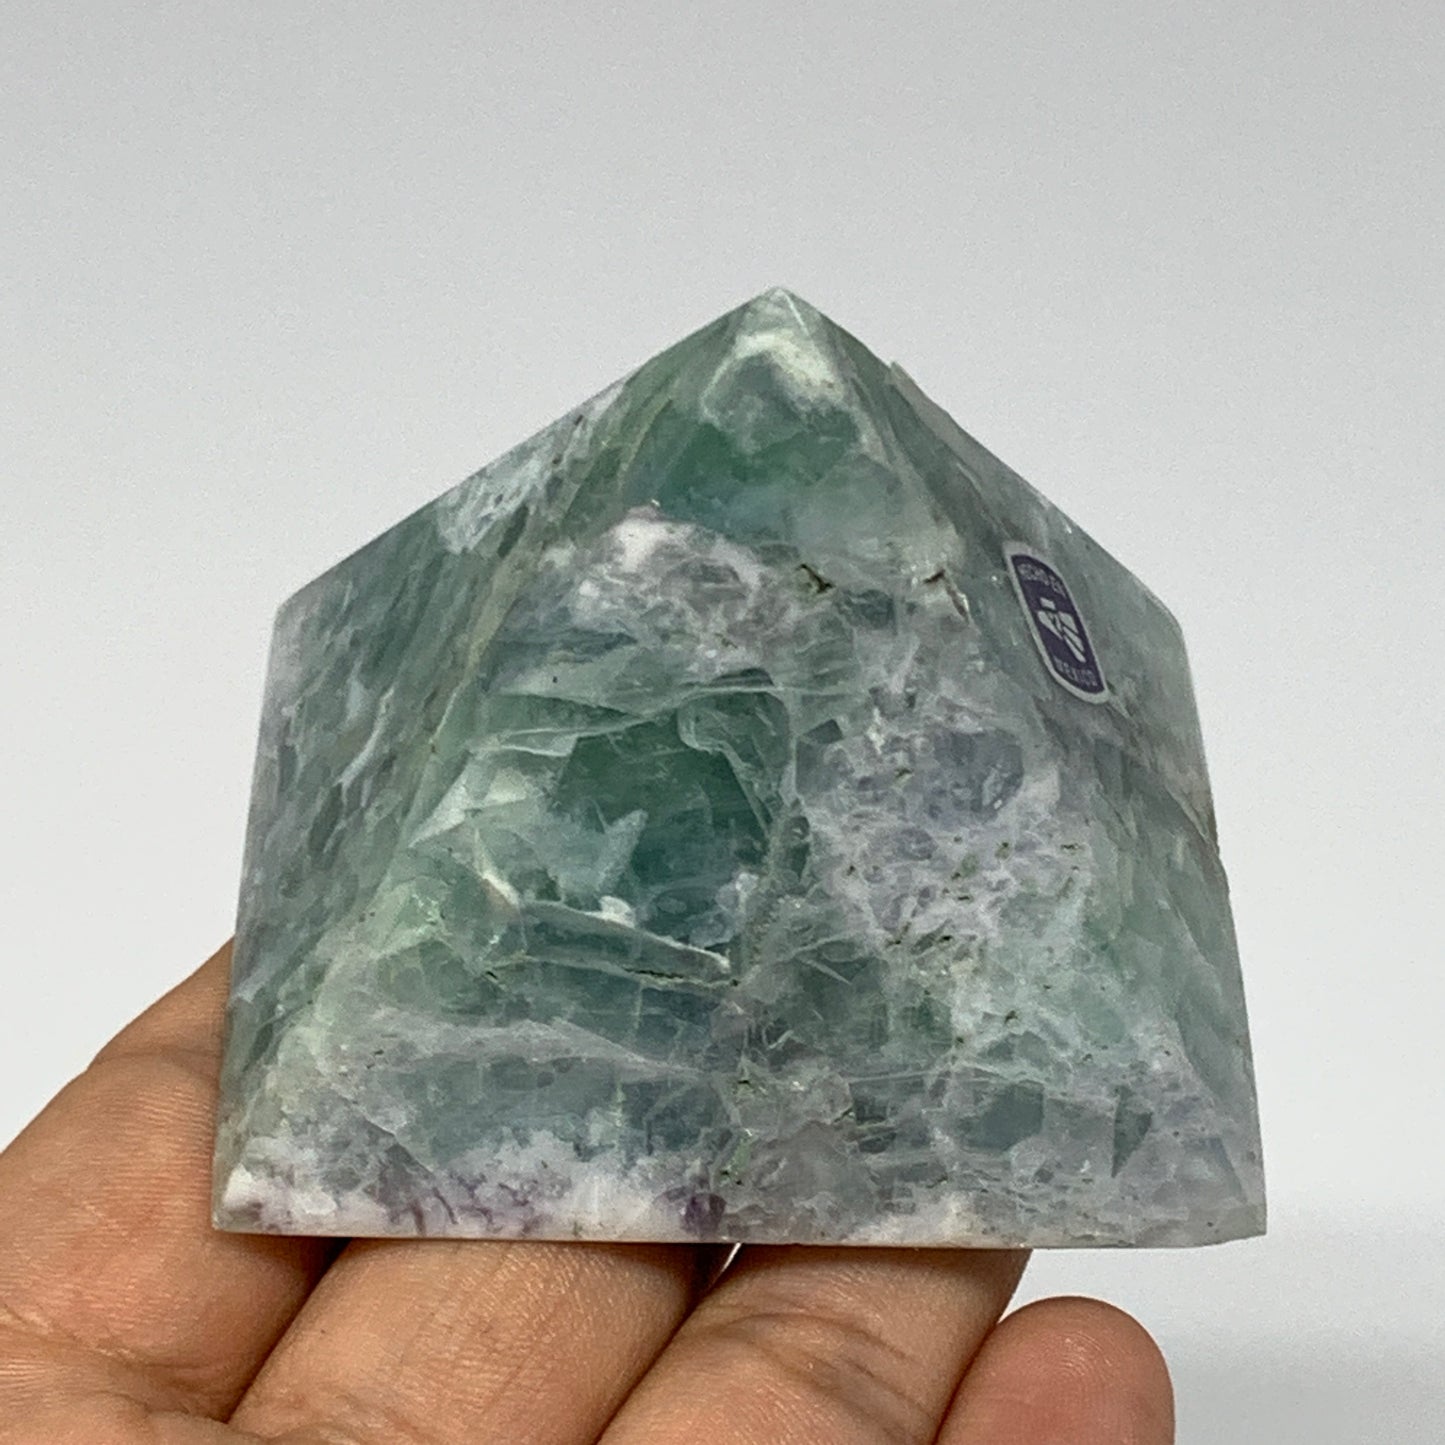 175.8g, 1.8"x2.4"x2.2" Natural Green Fluorite Pyramid Crystal Gemstone @Mexico,